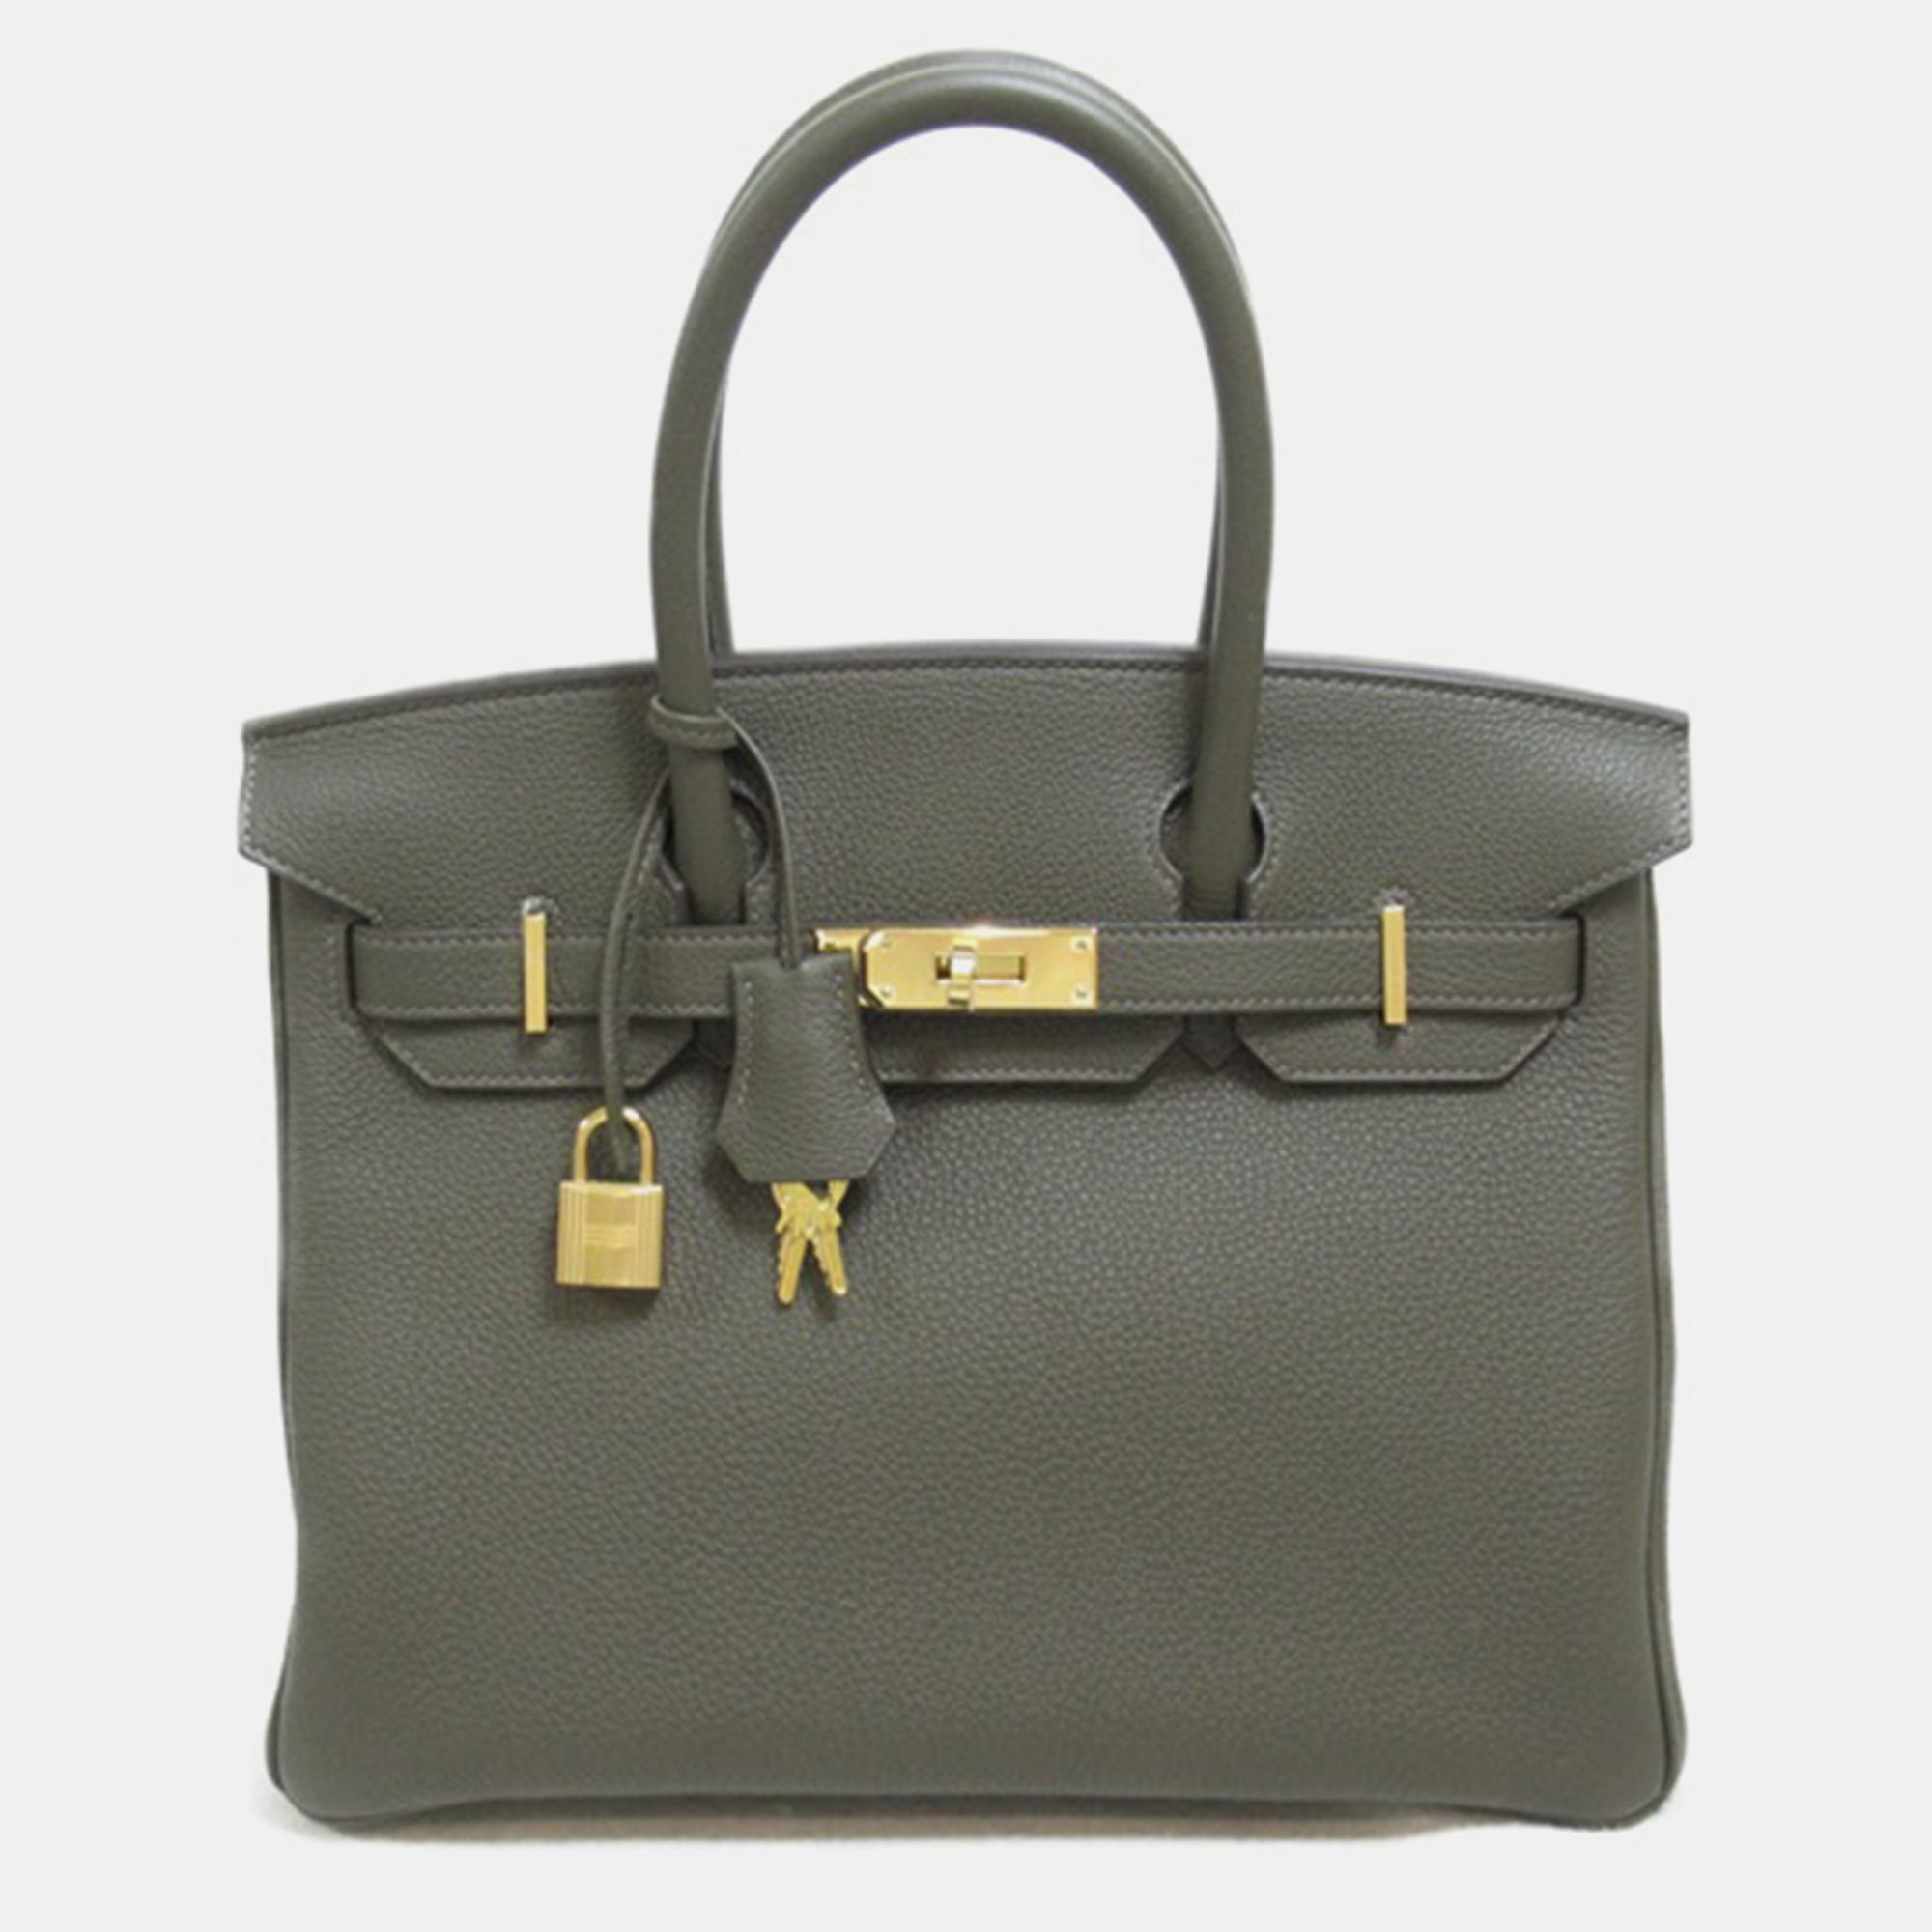 

Hermes Brown Leather Togo Birkin 30 Handbag